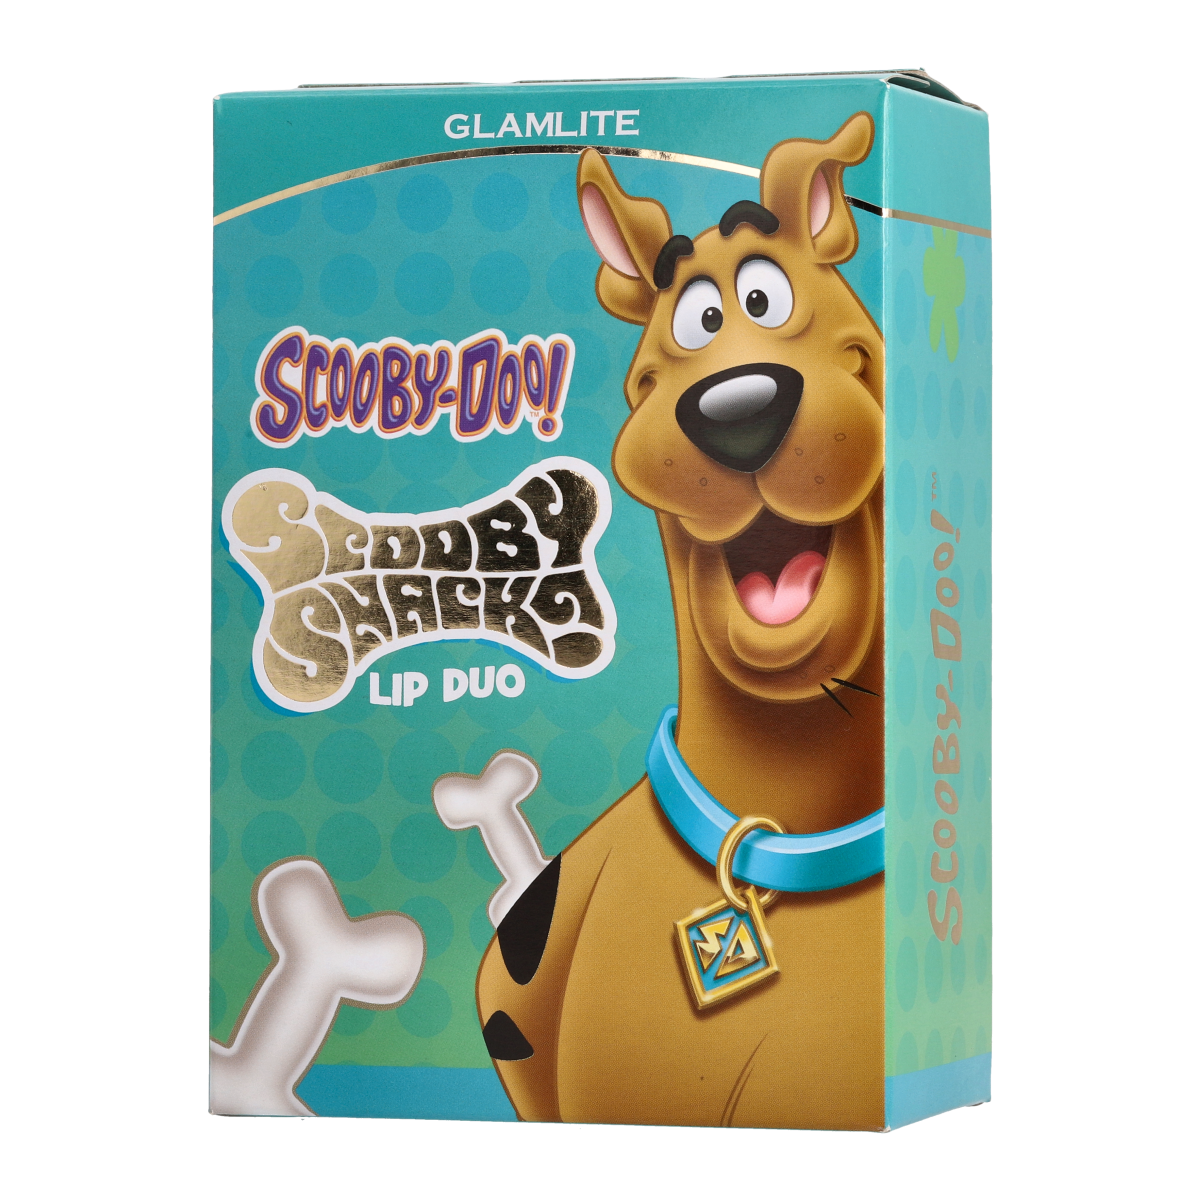 Scooby-Doo Scooby Snacks Lip Care Duo